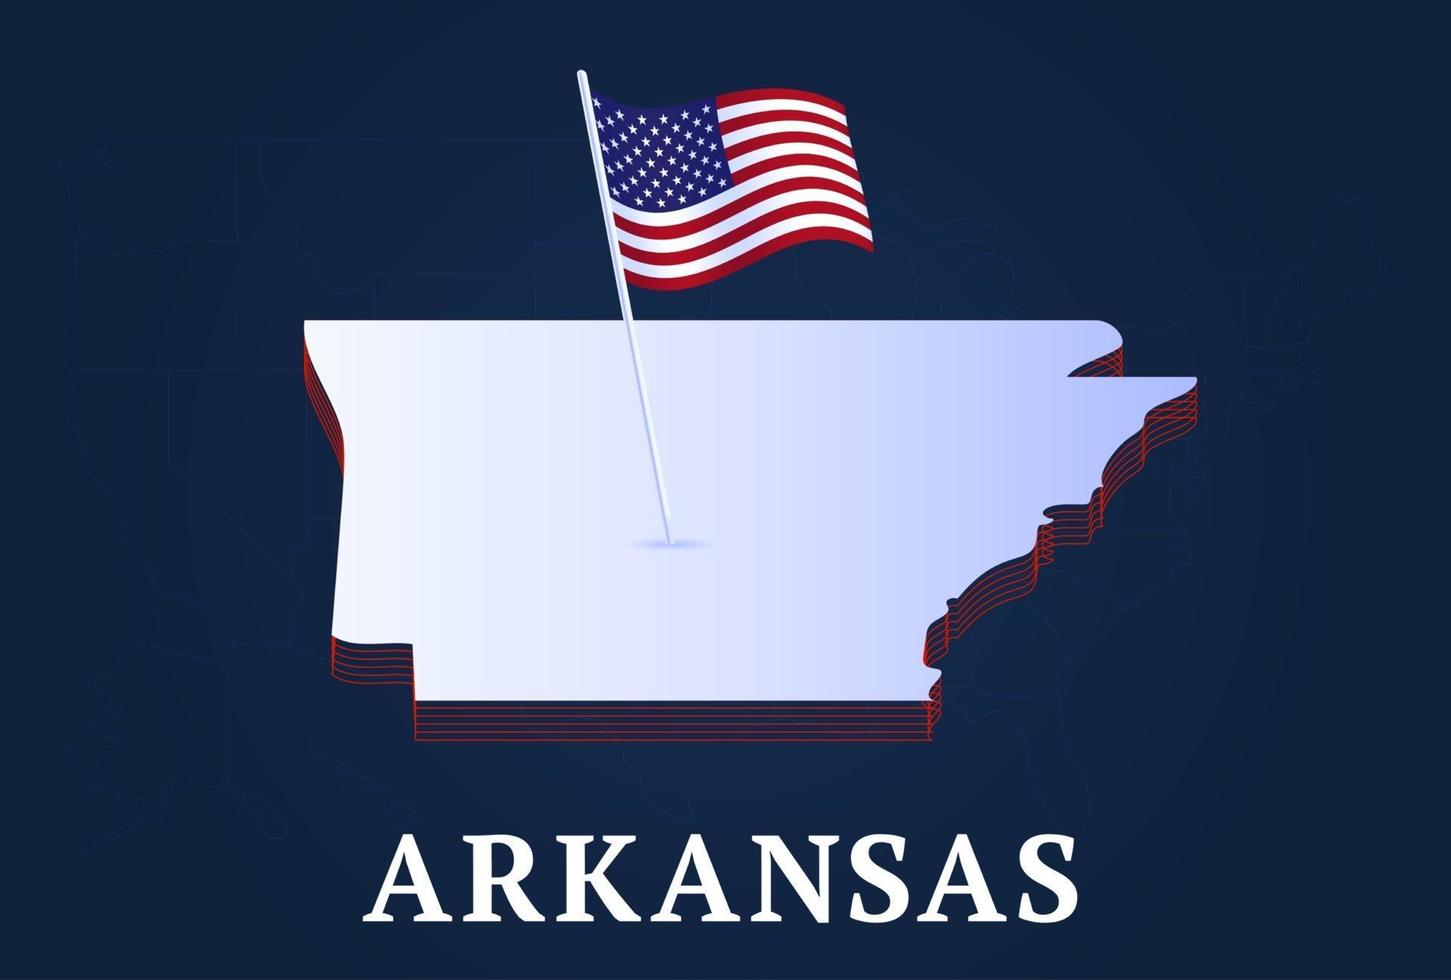 arkansas state Isometric map and USA natioanl flag 3D isometric shape of us state Vector Illustration